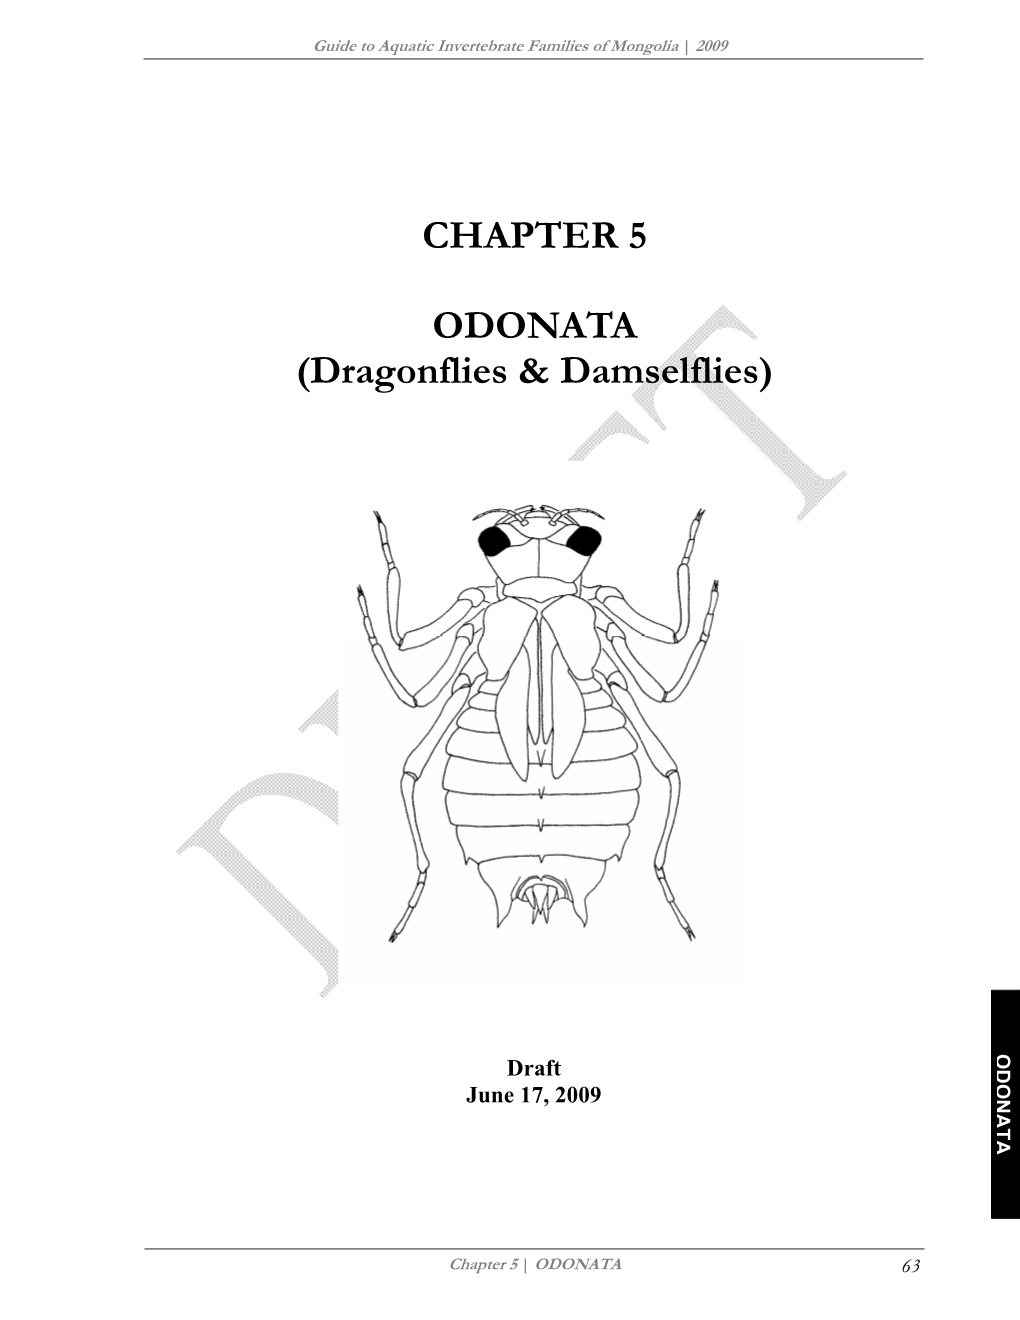 CHAPTER 5 ODONATA (Dragonflies & Damselflies)